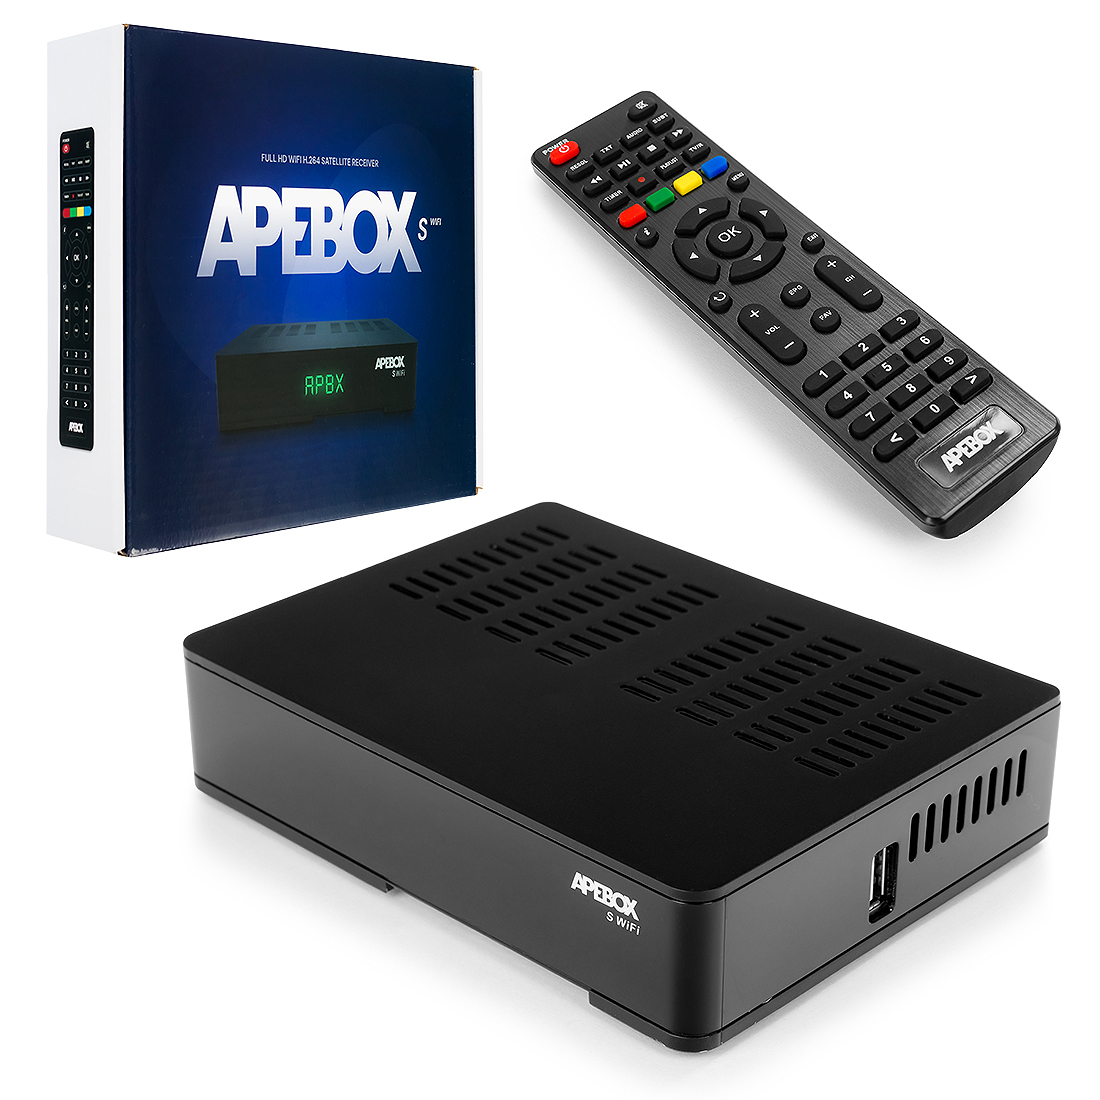 APEBOX S WiFi DVB-S2 H.265 IPTV